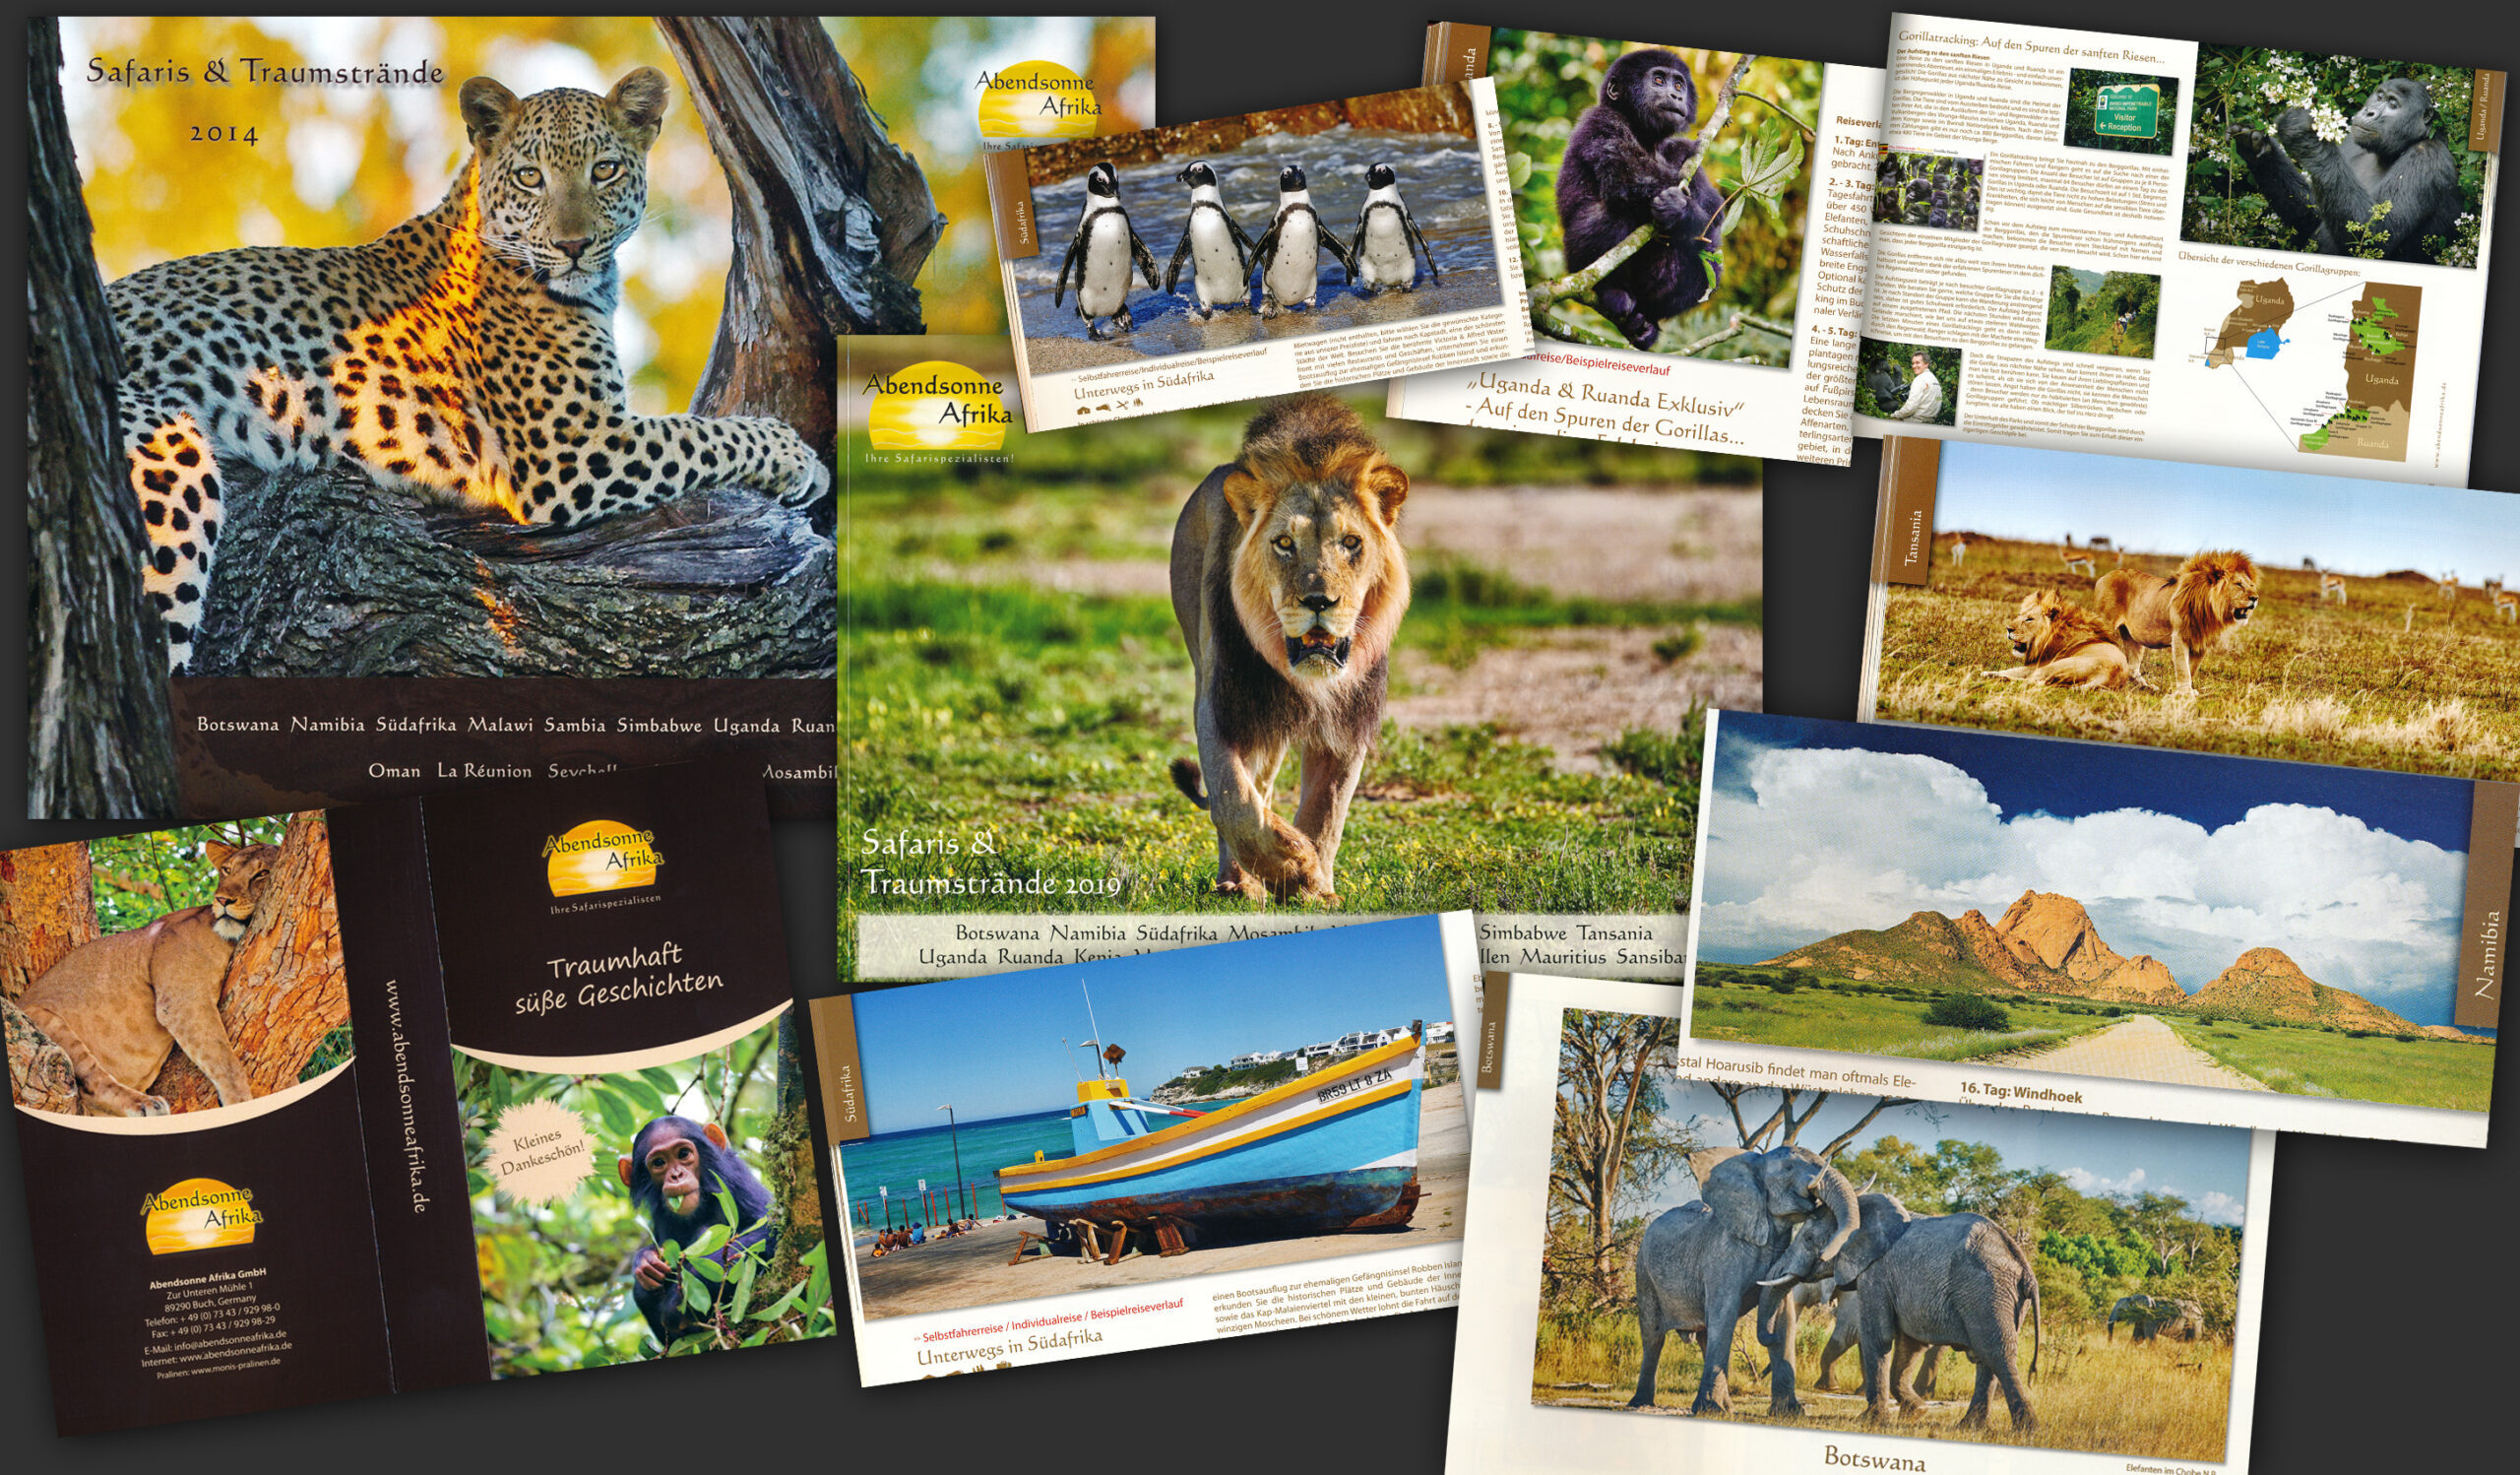 Katalog, Web etc. | Reiseveranstalter Abendsonne Afrika